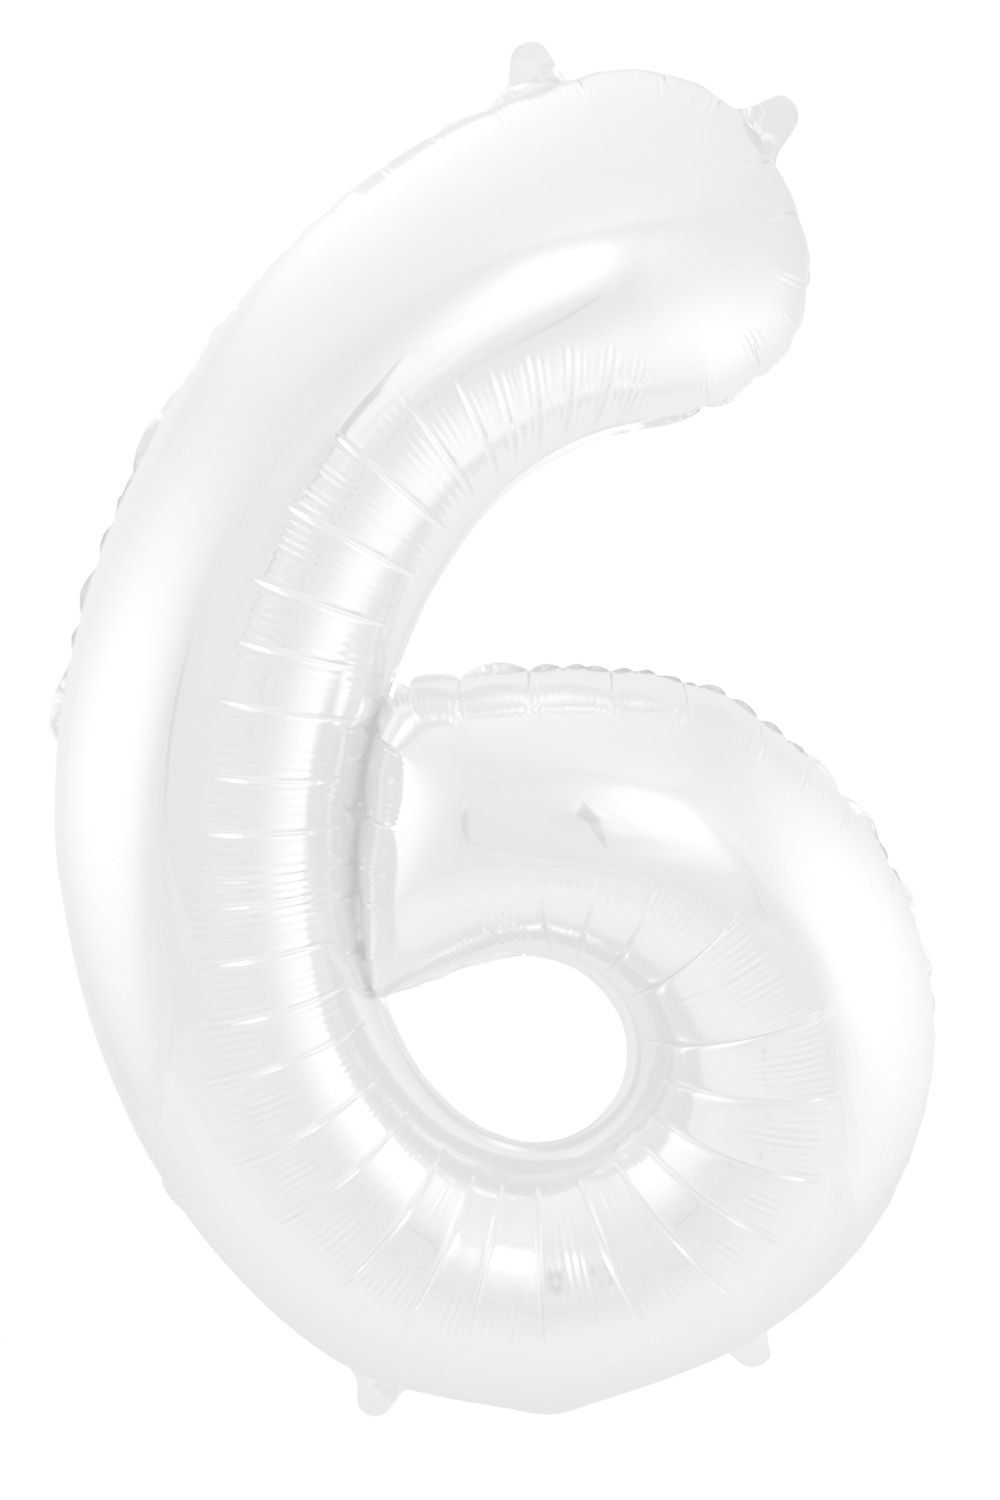 Cijfer 6 metallic wit folieballon 86cm